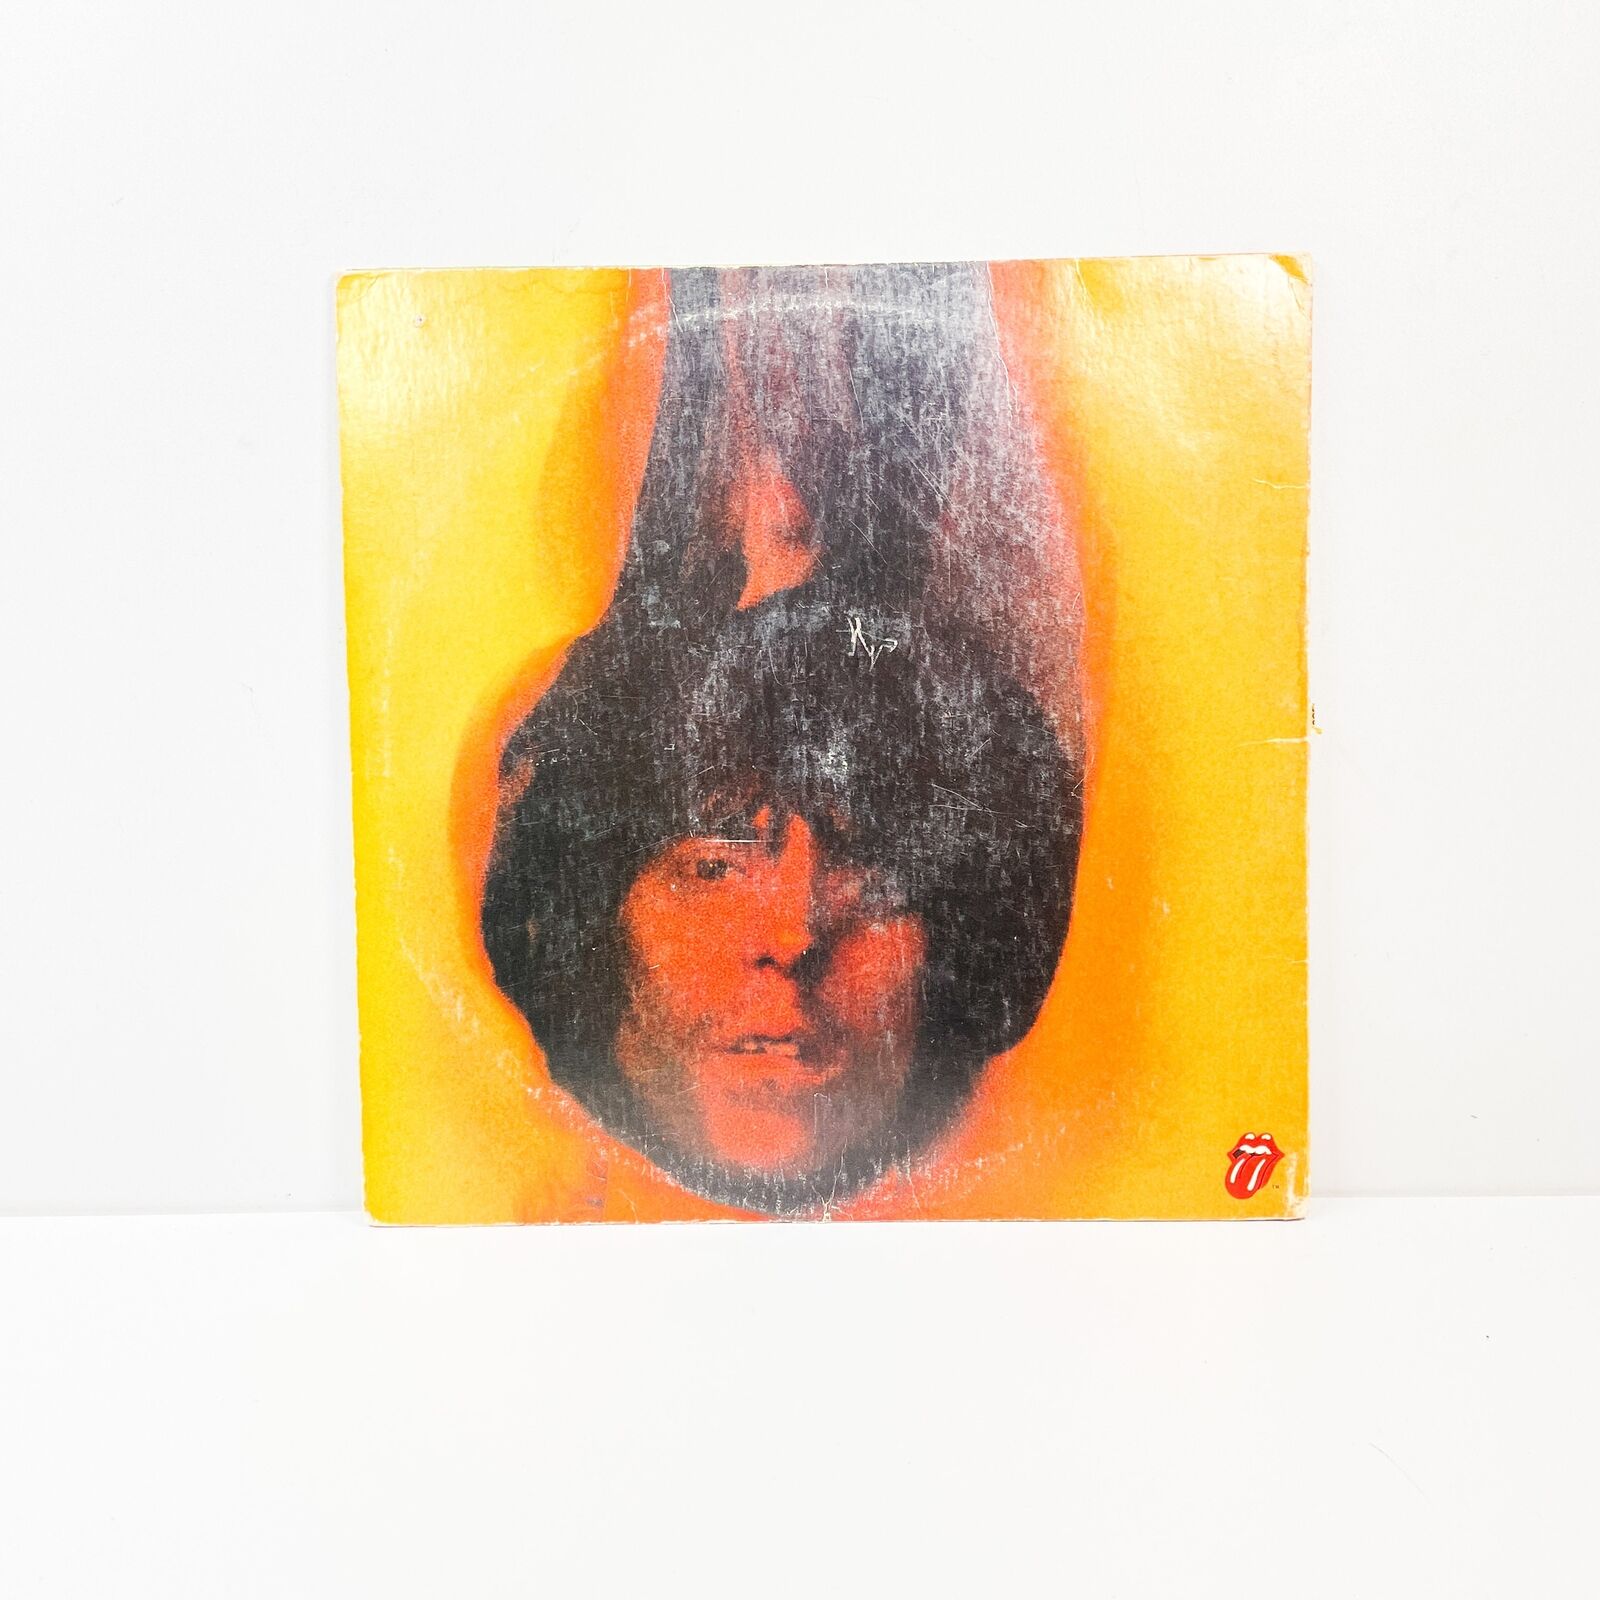 The Rolling Stones - Goats Head Soup - Vinyl LP Record - 1973